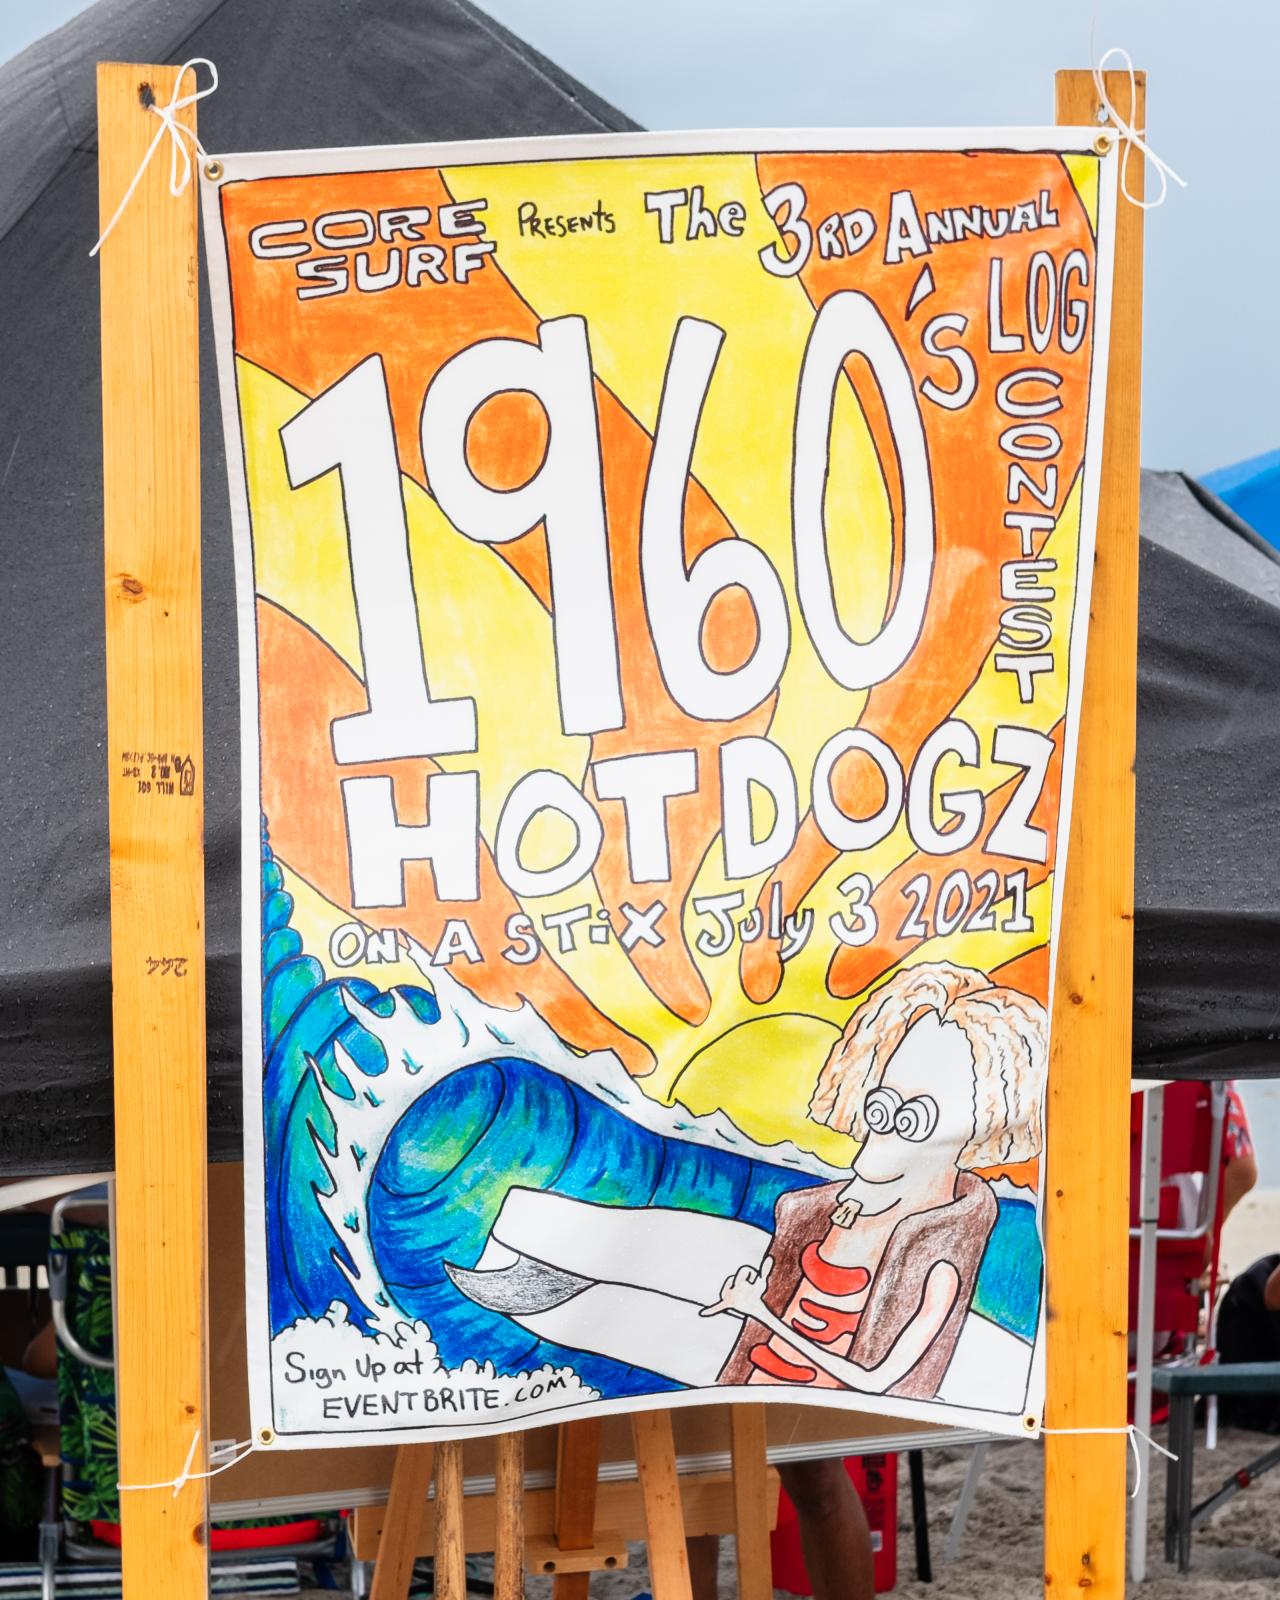 Cape Canaveral, FL. Hotdogzonastix Surf Contest July 2021 -  Sign of the Third Annual Hotdogzonastix Surf Contest...